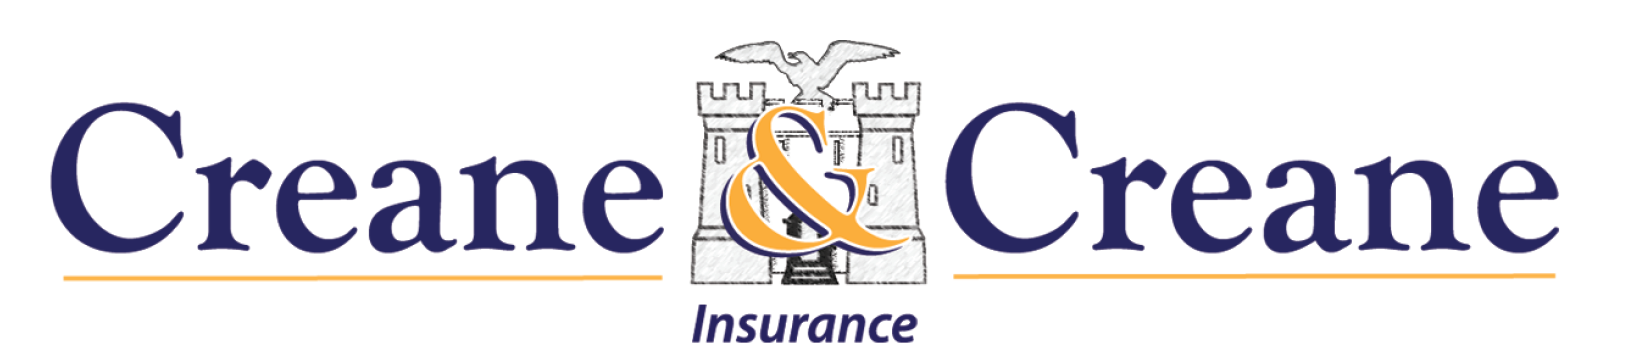 Creane and Creane Insurance